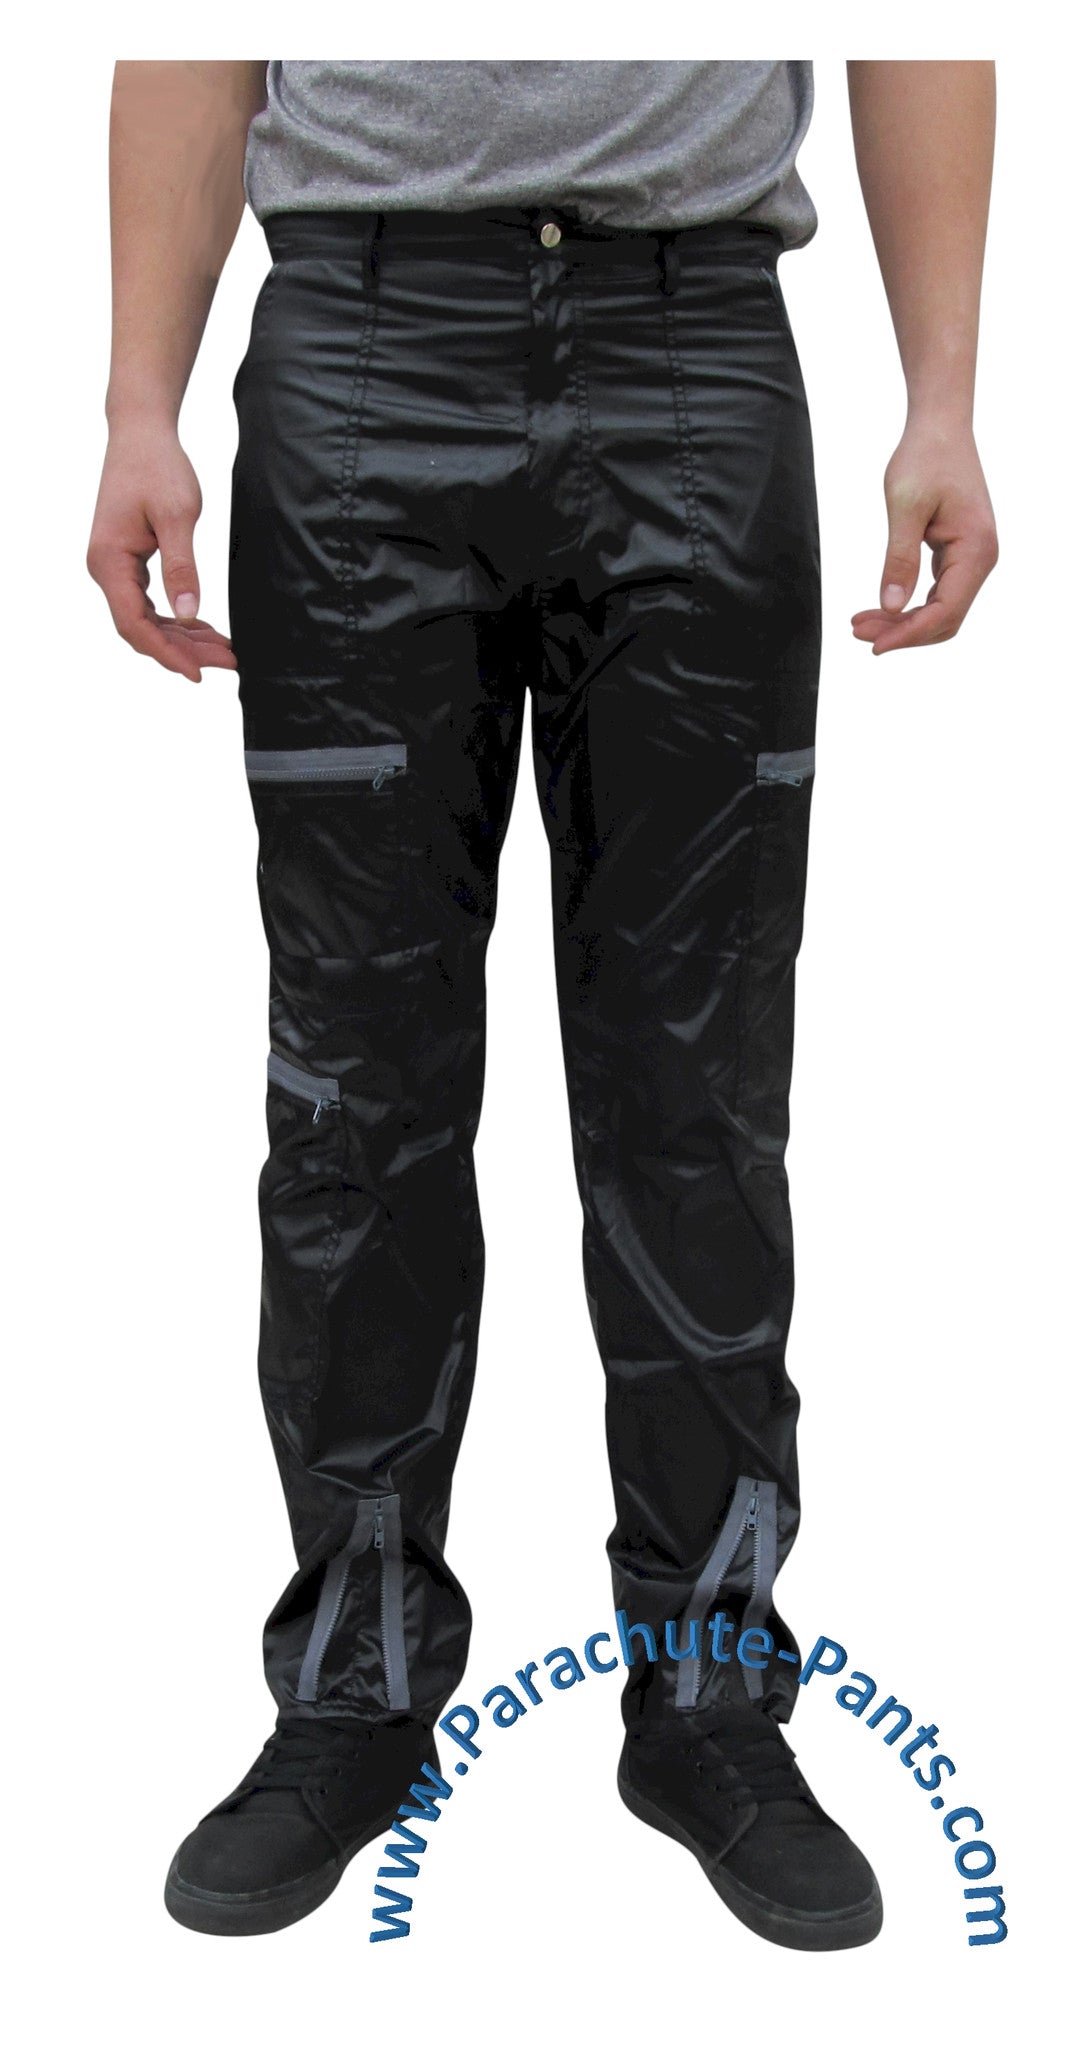 Countdown Black Shiny Nylon Parachute Pants with Grey Zippers | The ...